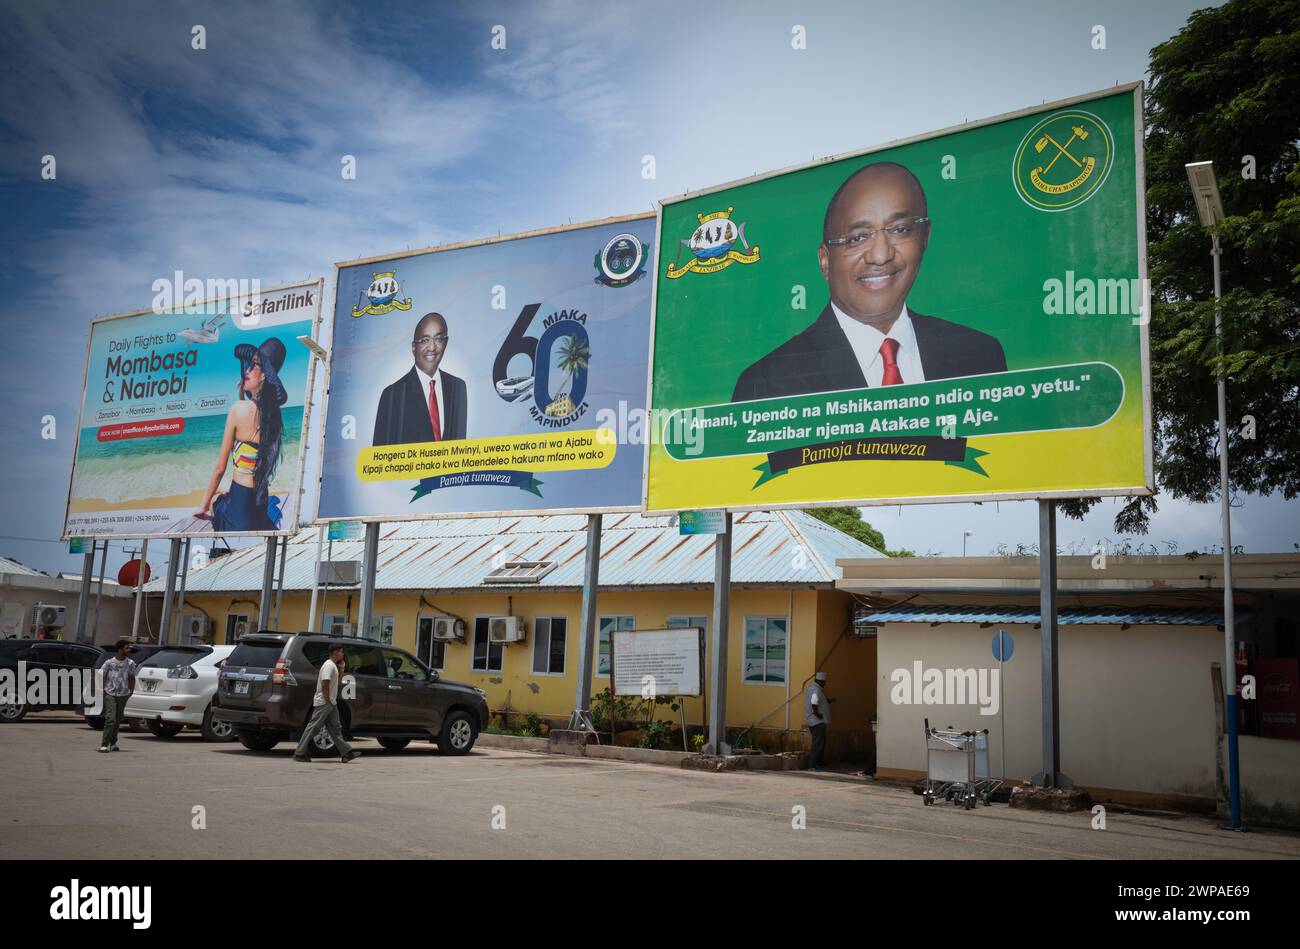 Political posters supporting Hussein Mwinyi, the president of Zanzibar, and a travel advert, at Zanzibar airport, Tanzania. Stock Photo